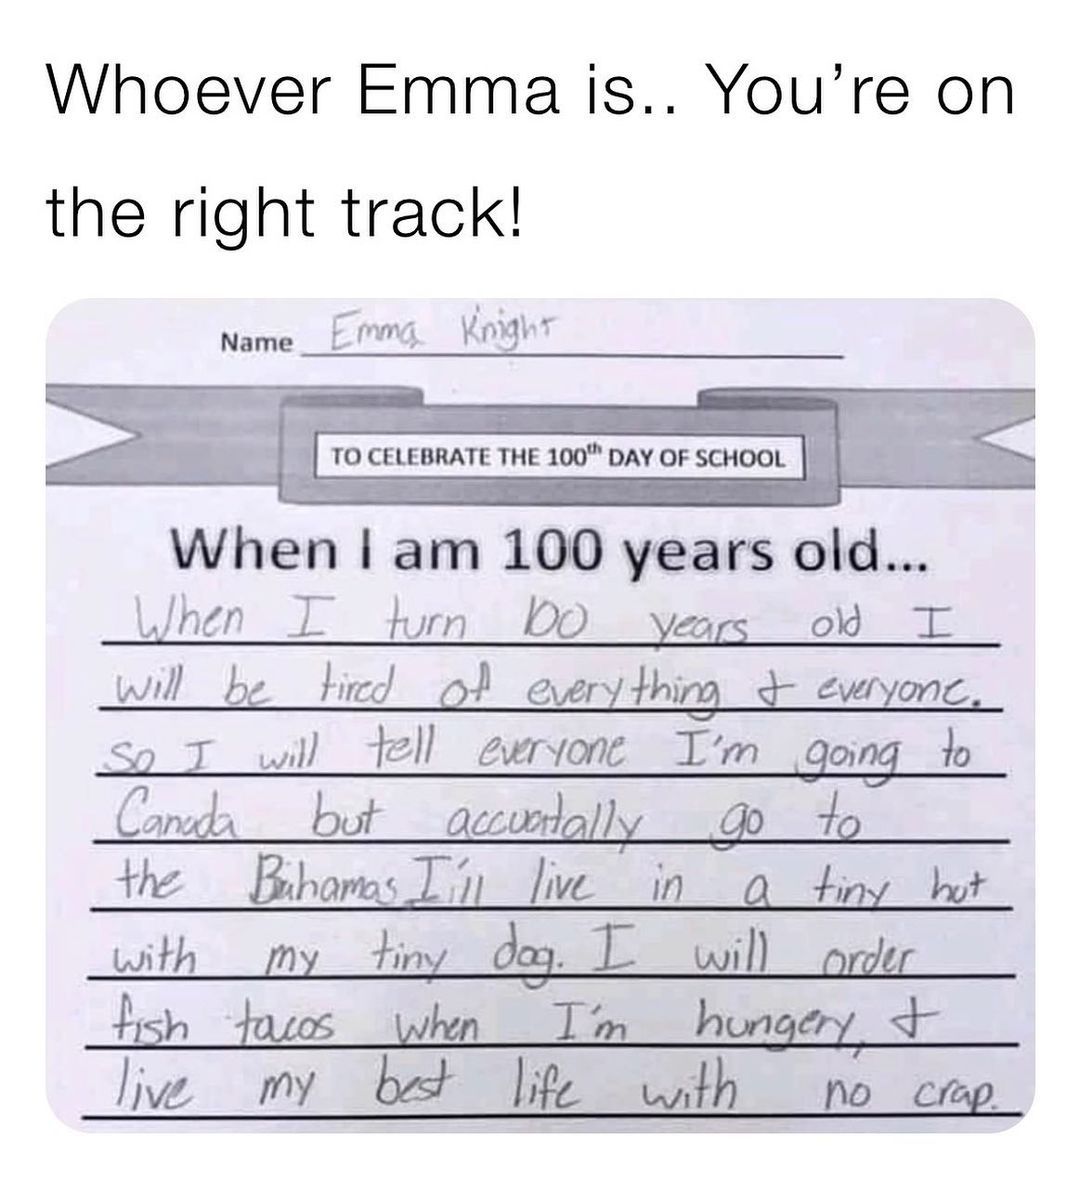 Go Emma go.